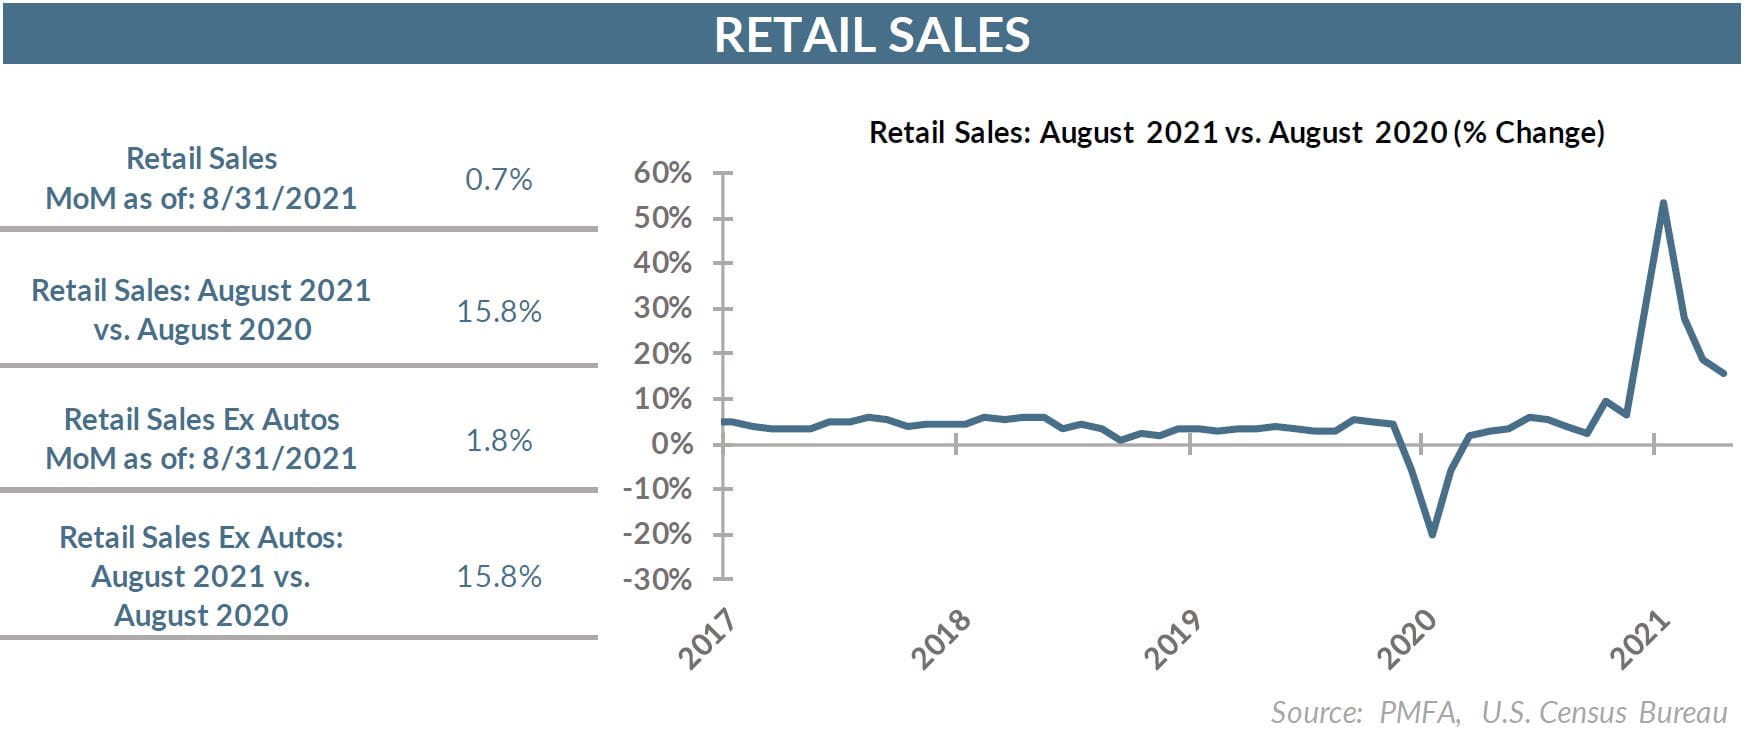 Retail Sales: August 2021 vs August 2020 (% Change)